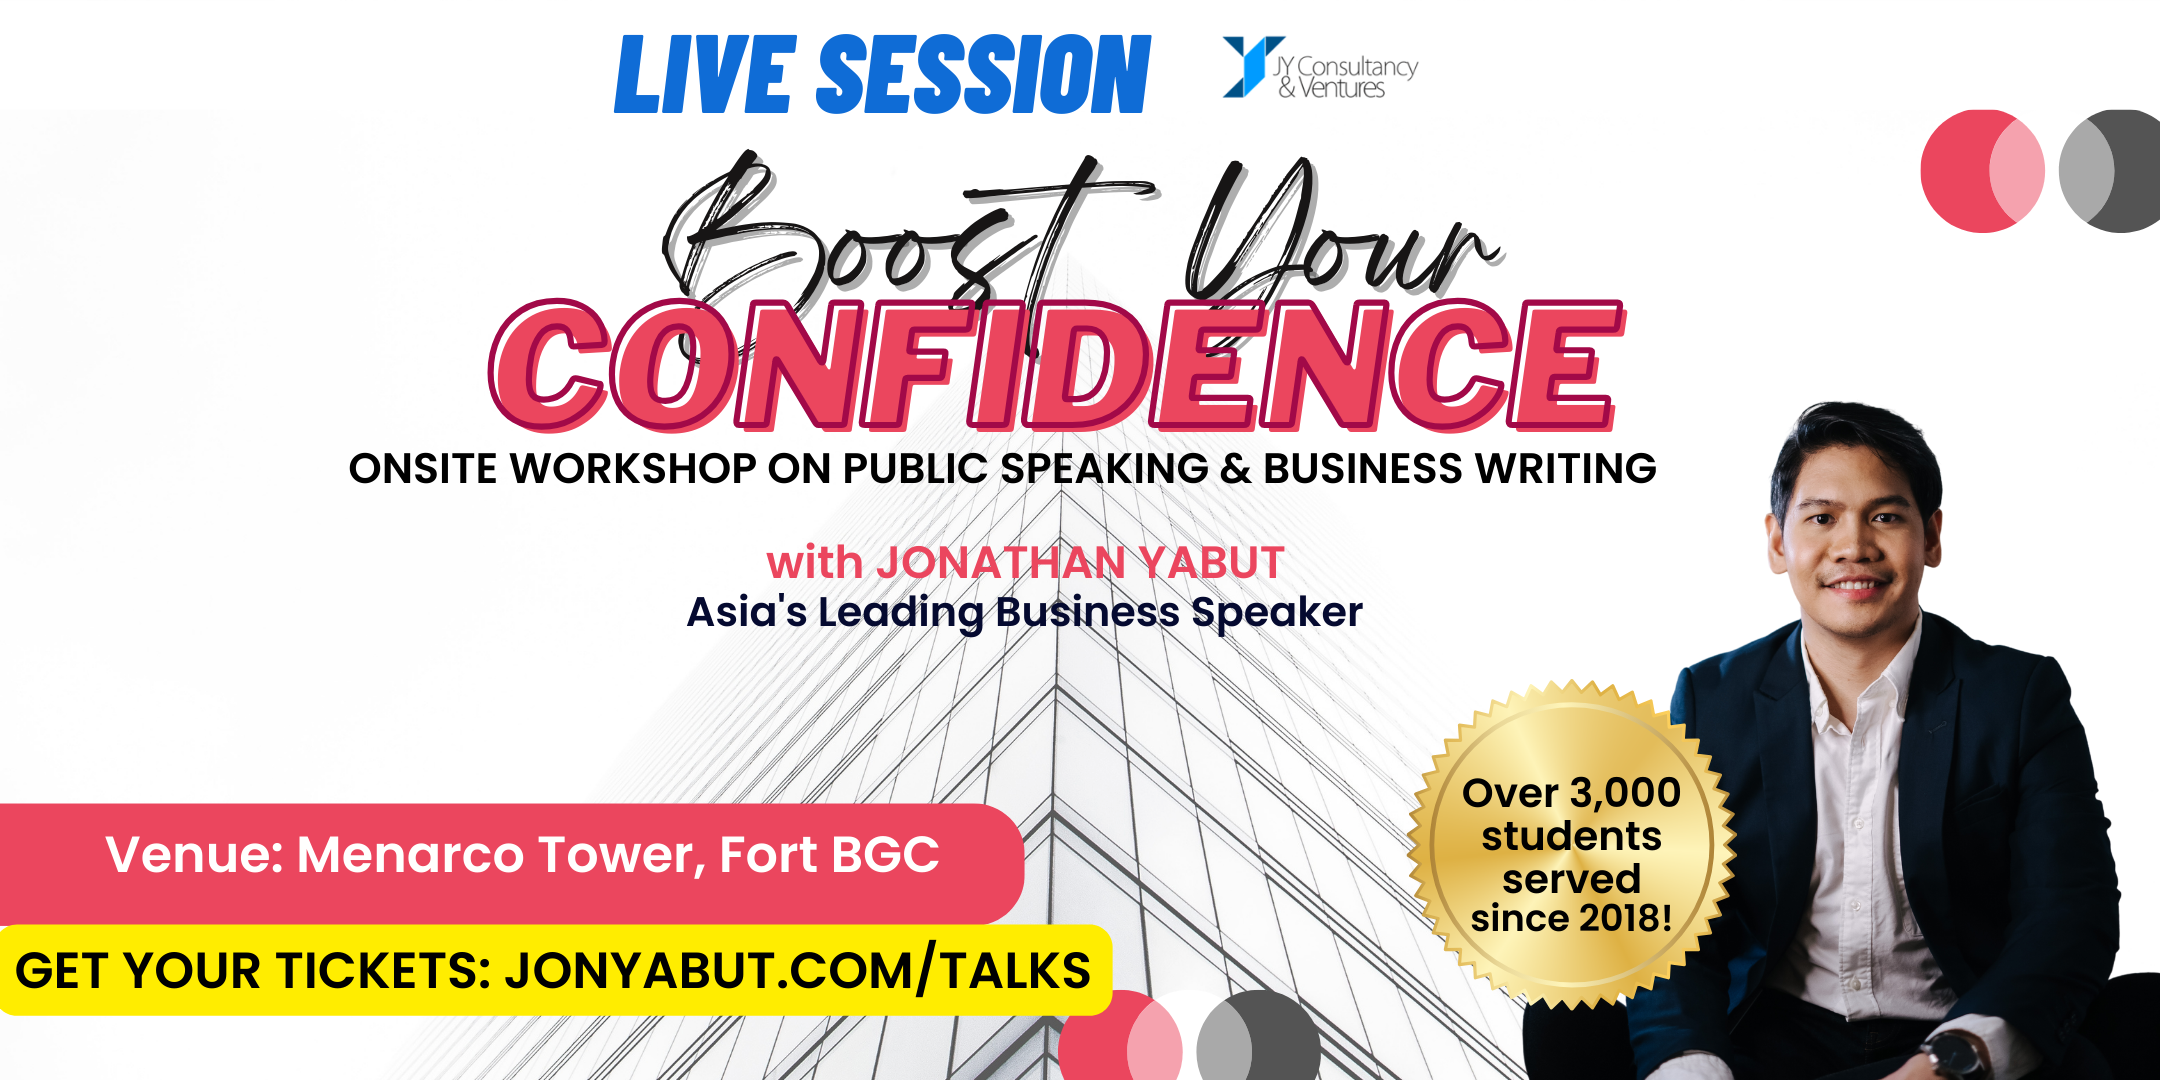 Jonathan Yabut motivational speaker asia philippines workshop career public speaking leadership social media